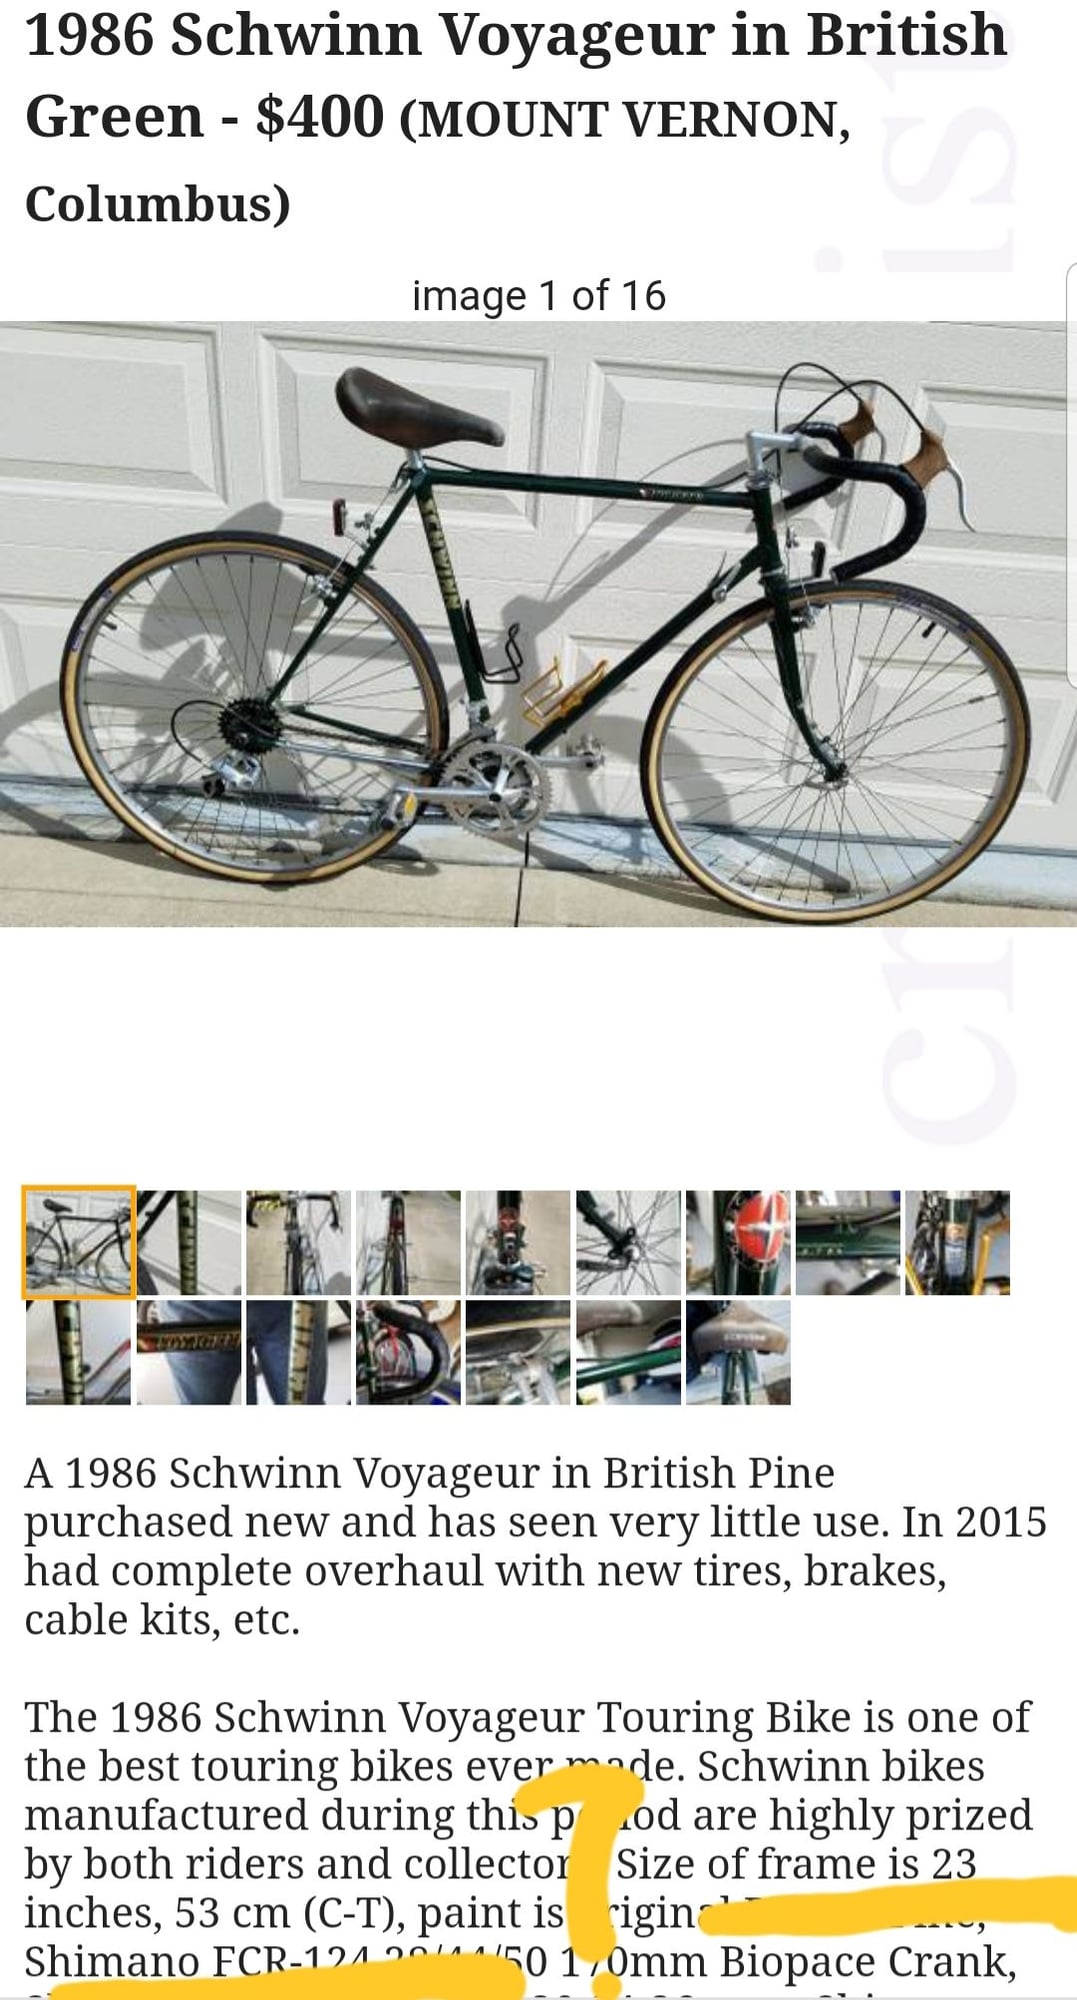 ebay schwinn bicycles